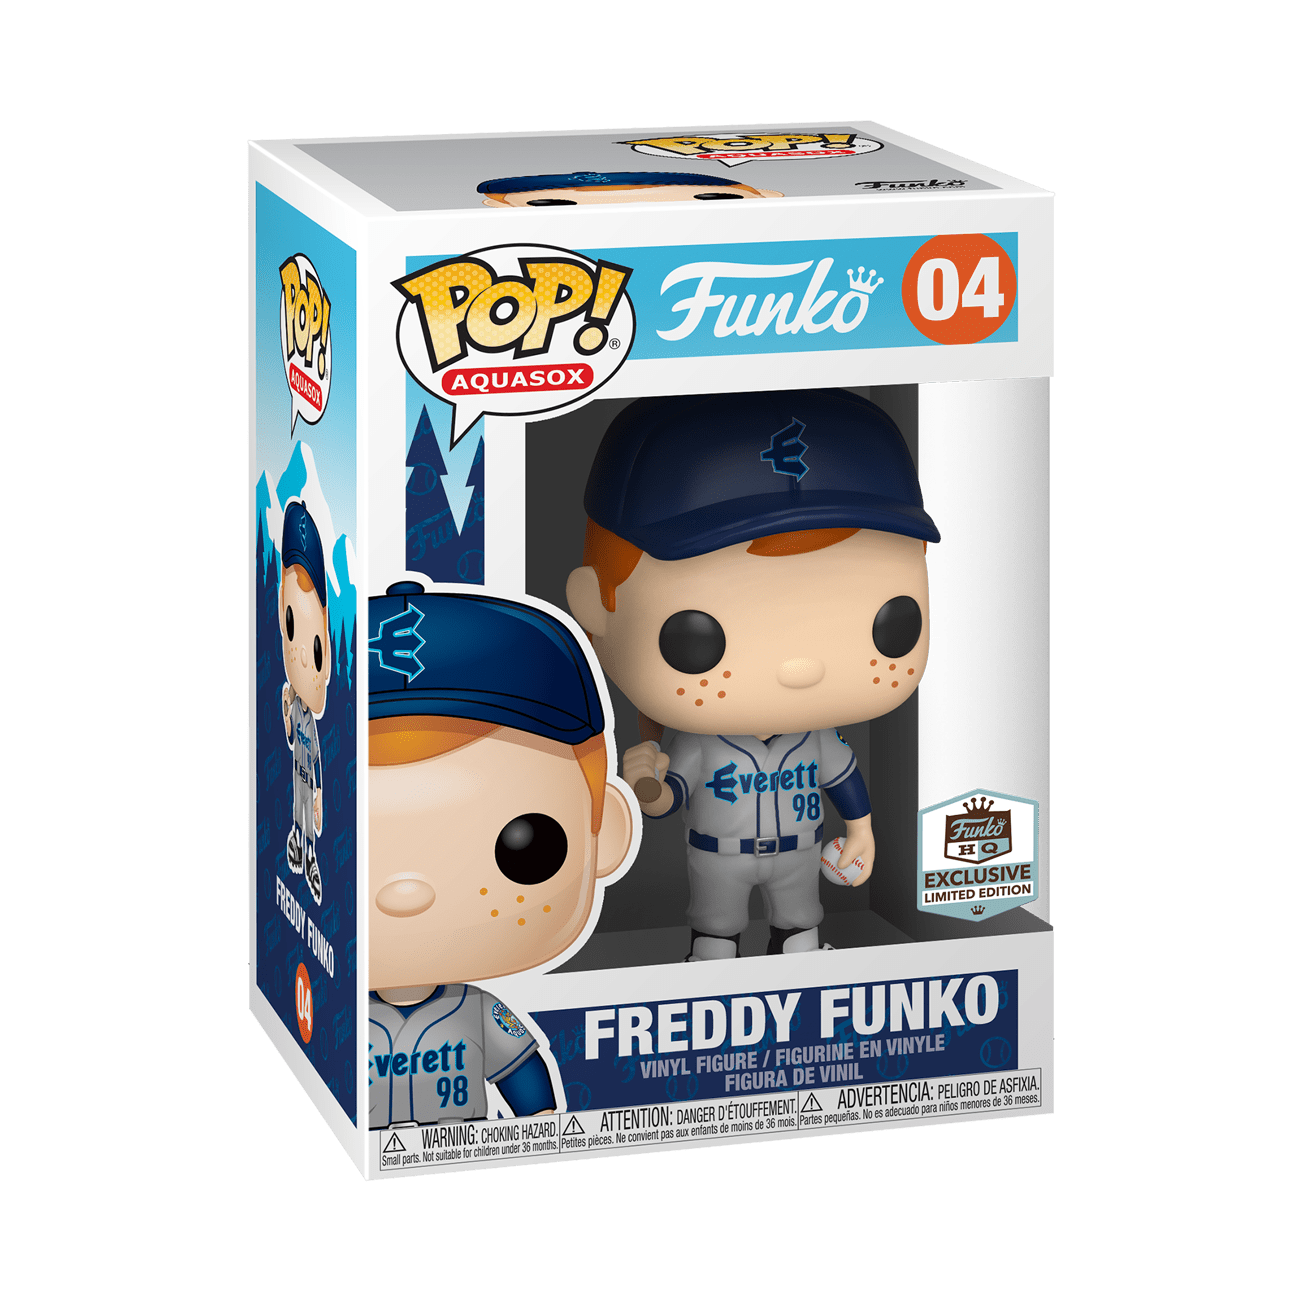 Funko Pop! Freddy Funko (Aquasox Jersey) (Freddy Funko)